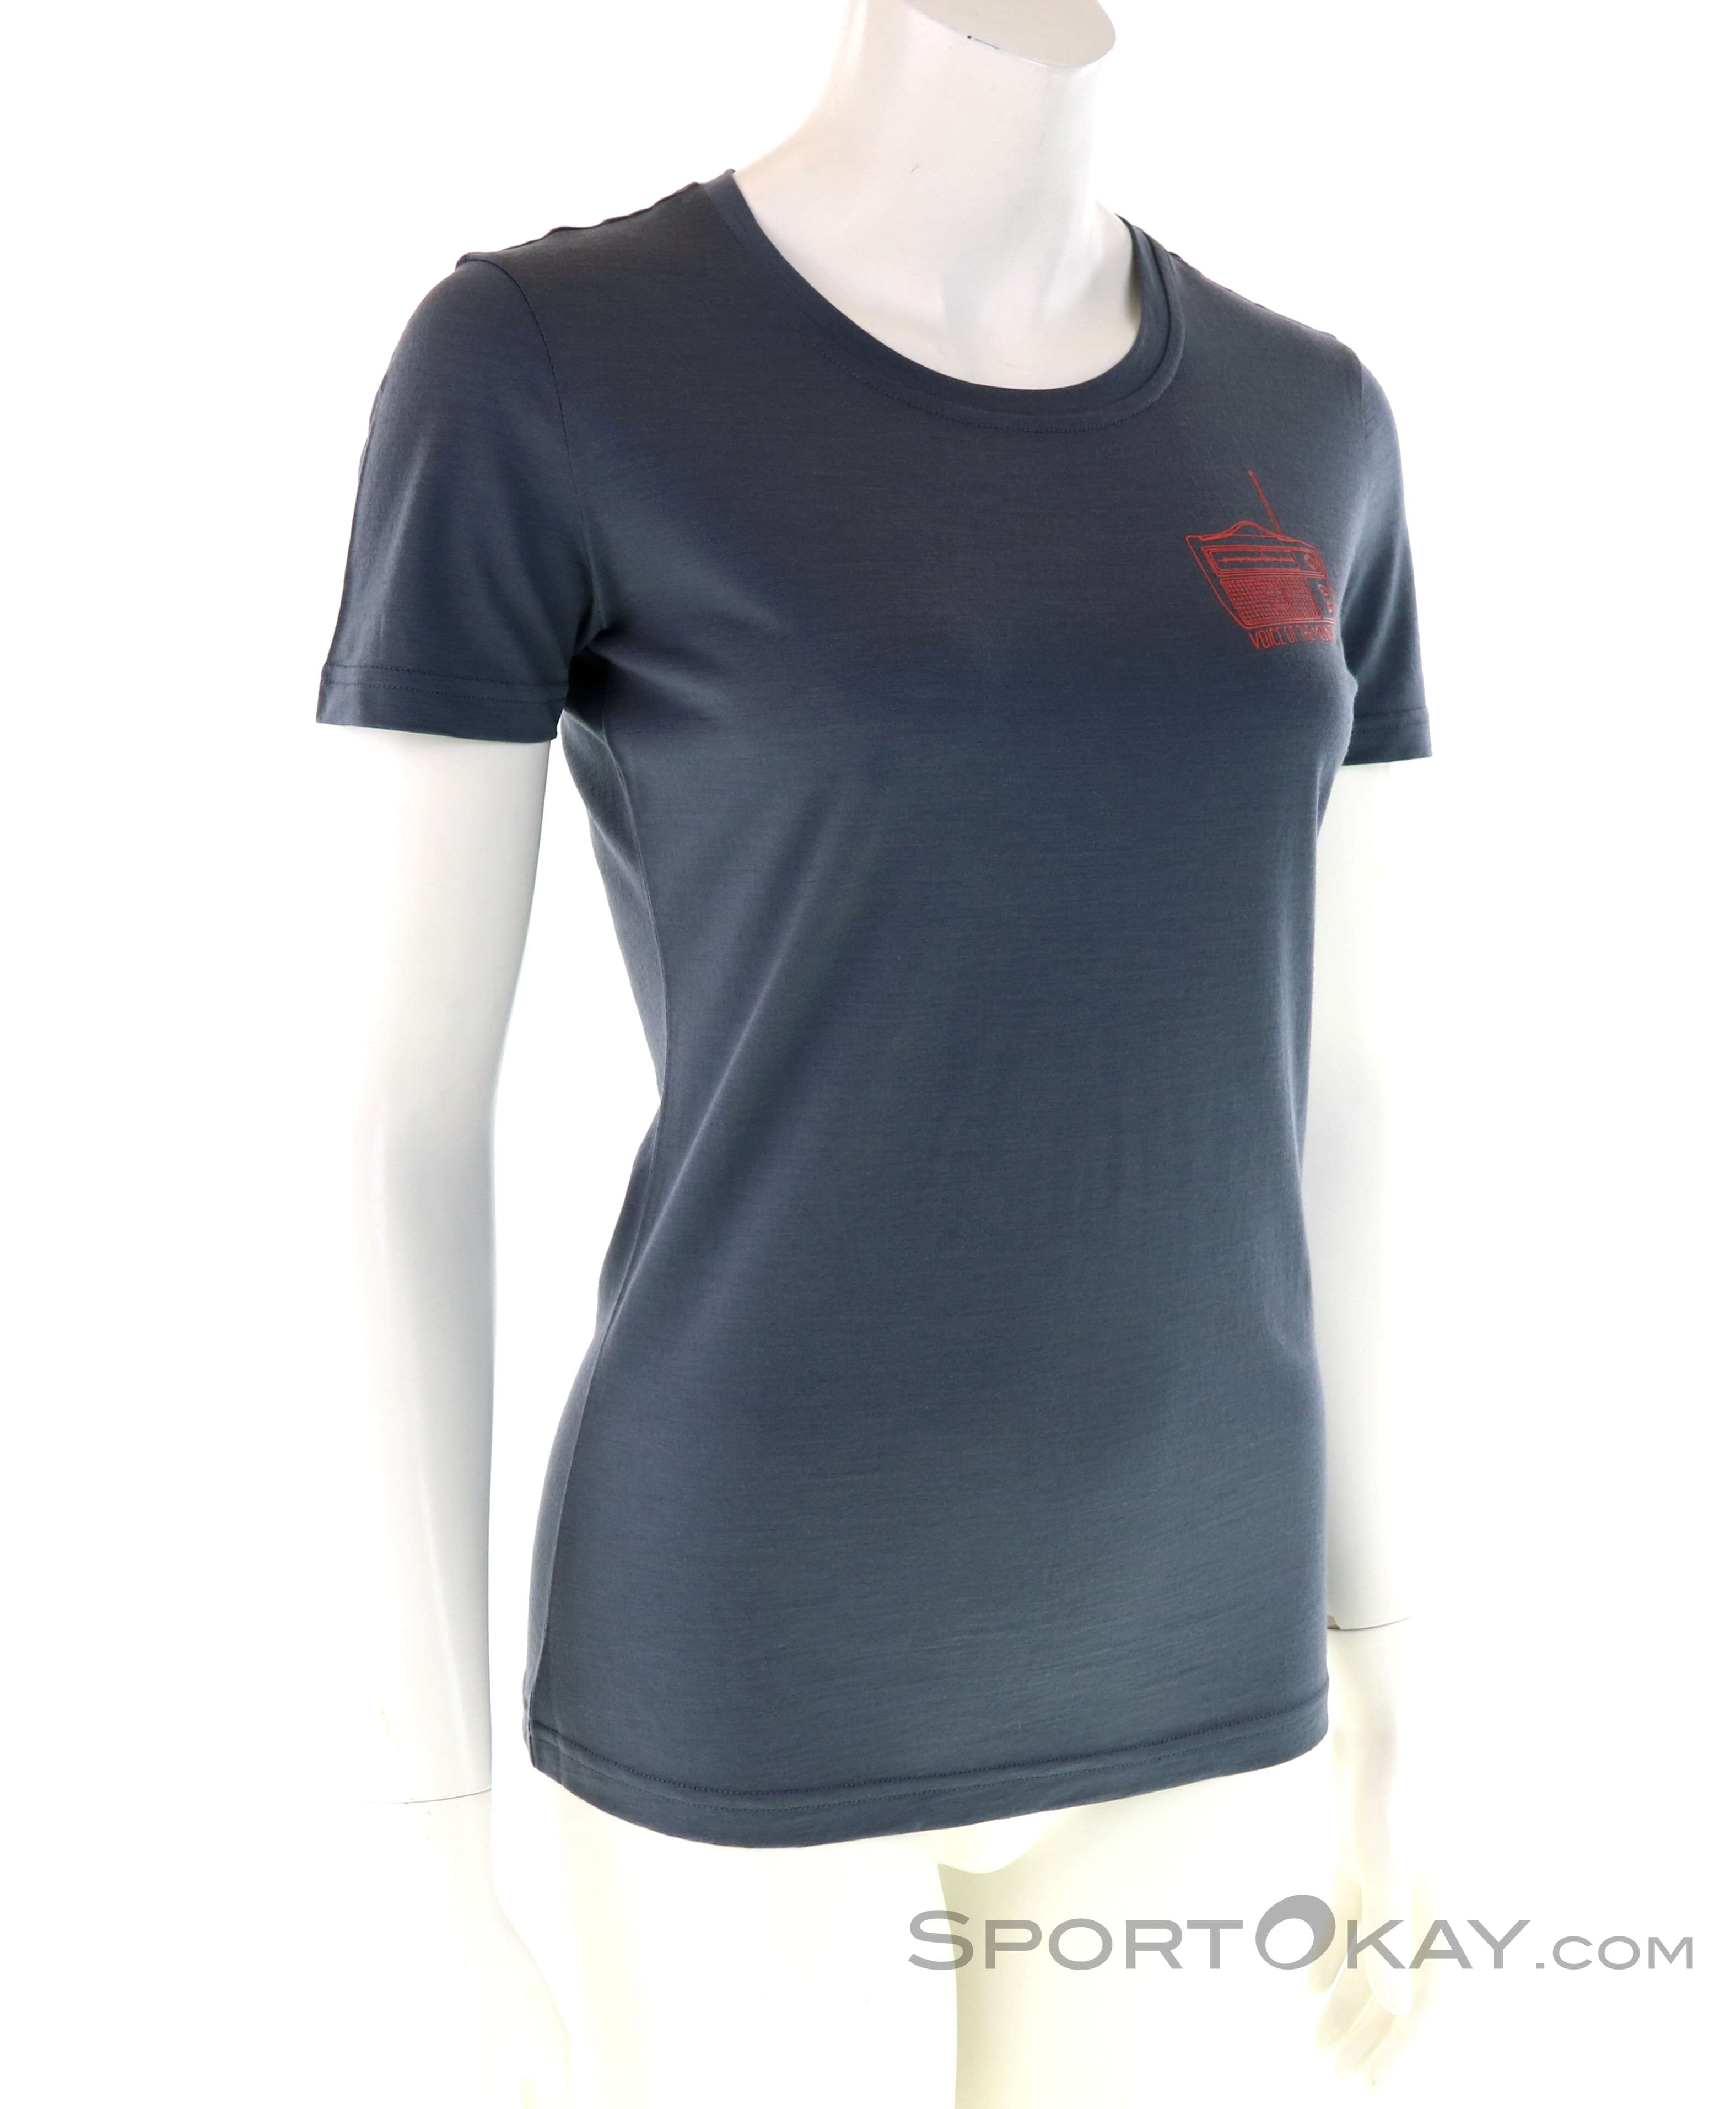 Ortovox 150 Cool Radio Ts Damen T Shirt Shirts Hemden Outdoorbekleidung Outdoor Alle